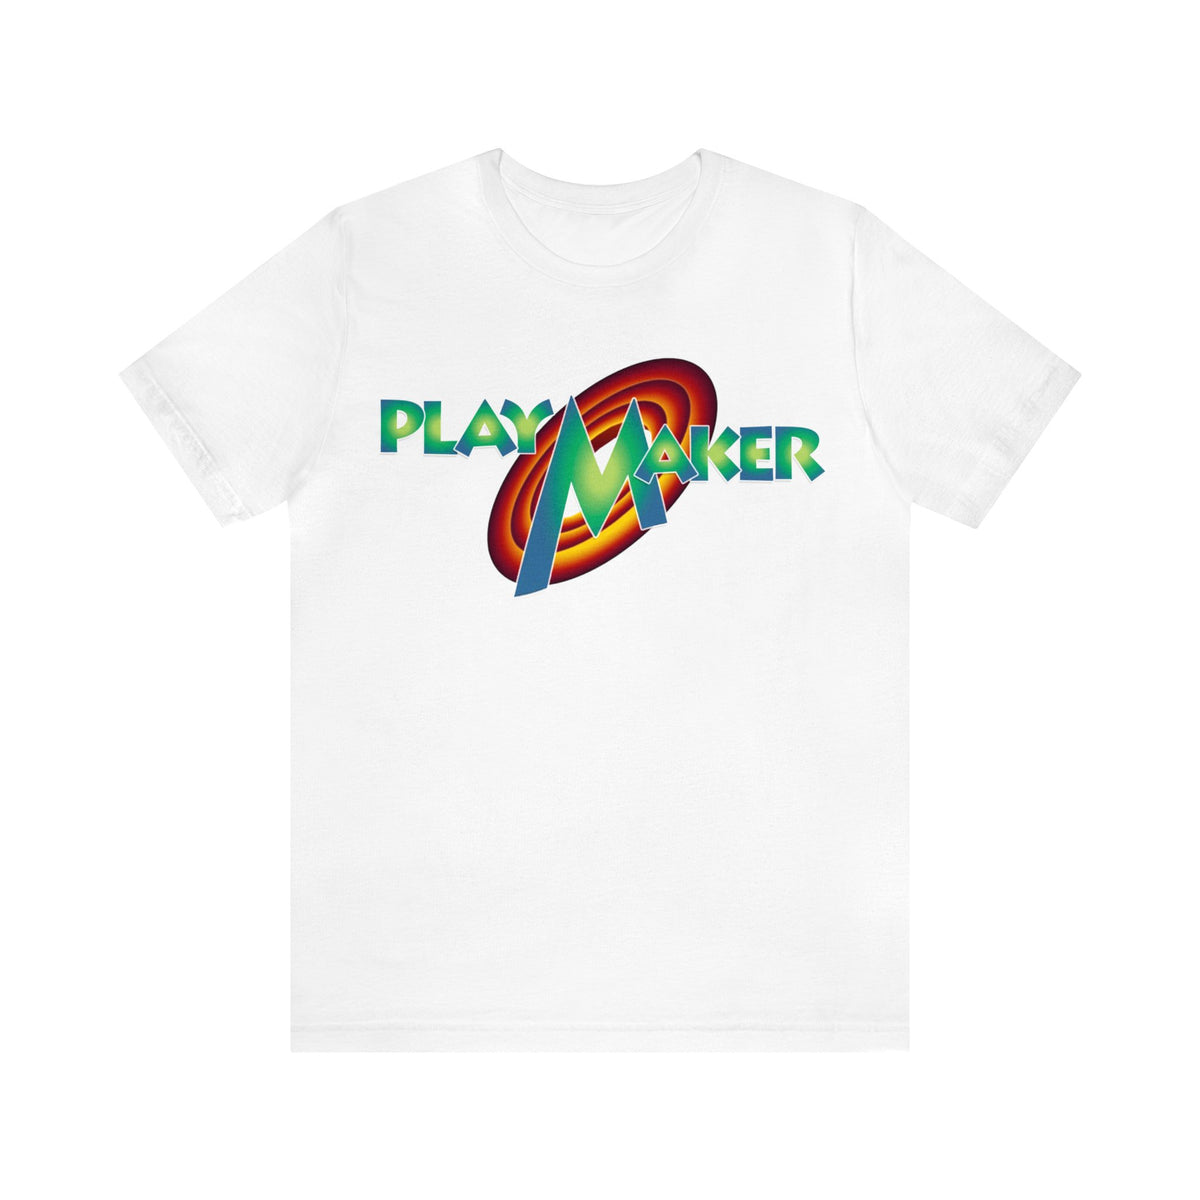 Playmaker "Jam" Tee